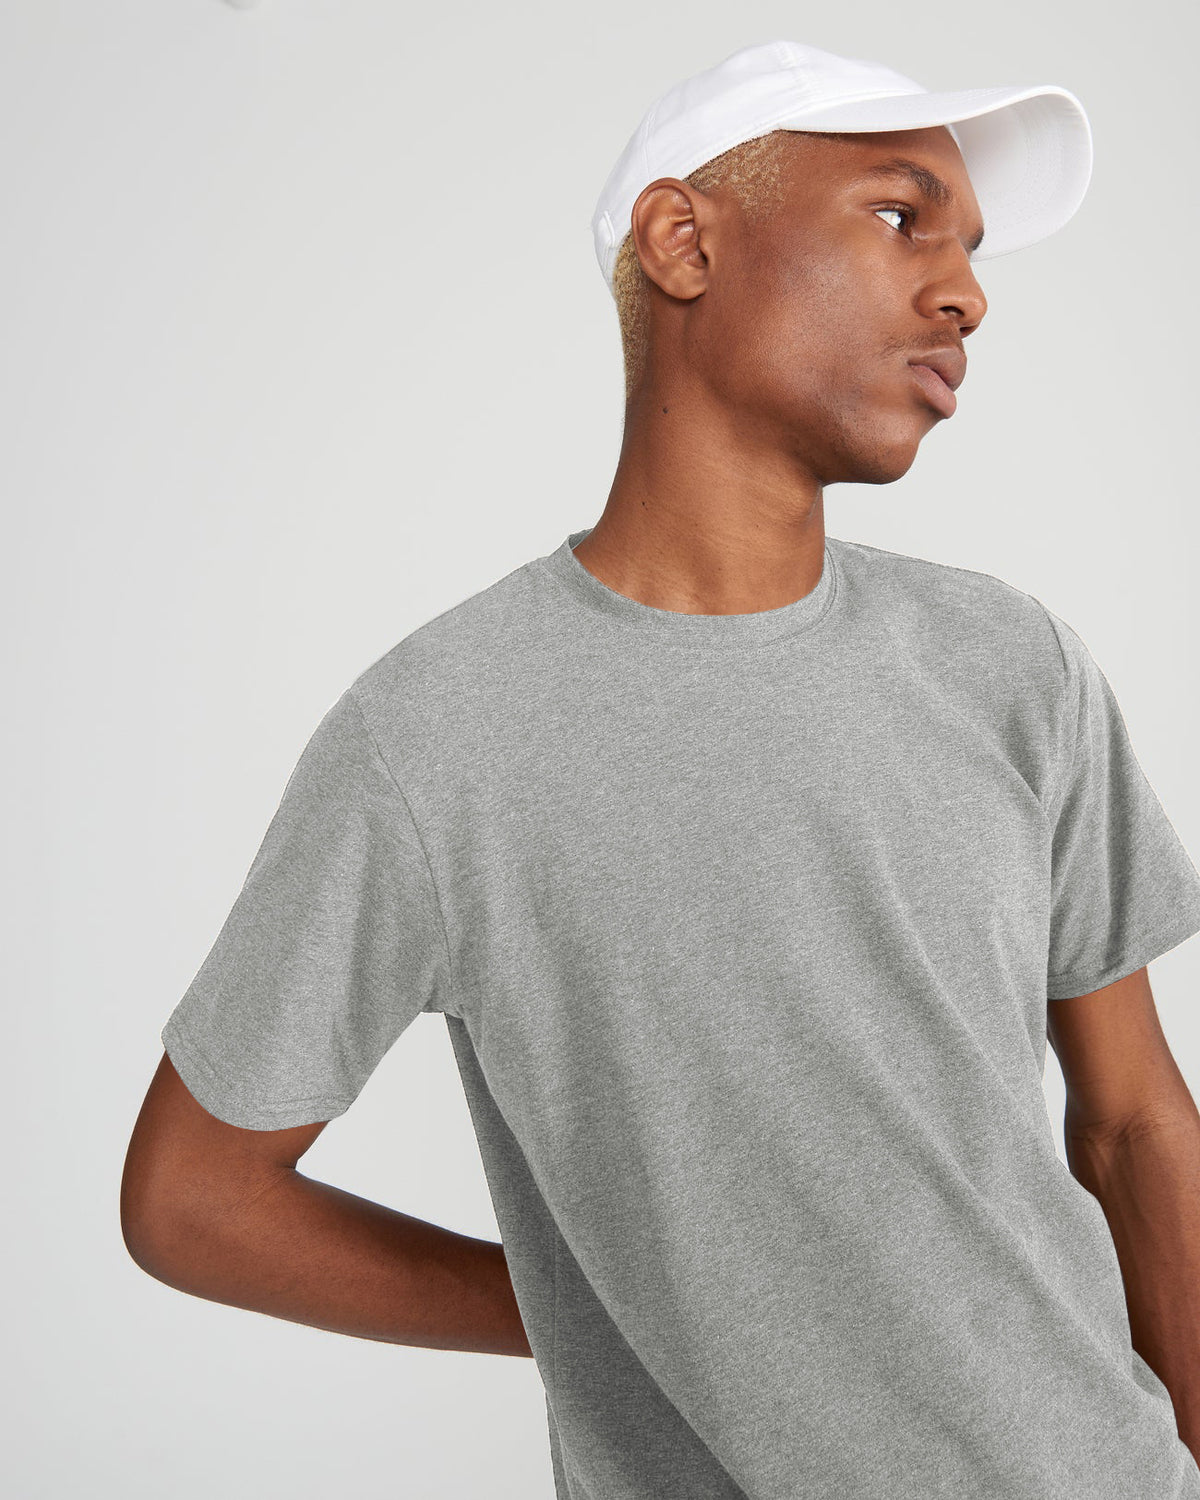 Wholesale Breathable Sweatproof T Shirt For Men Modal Seamless